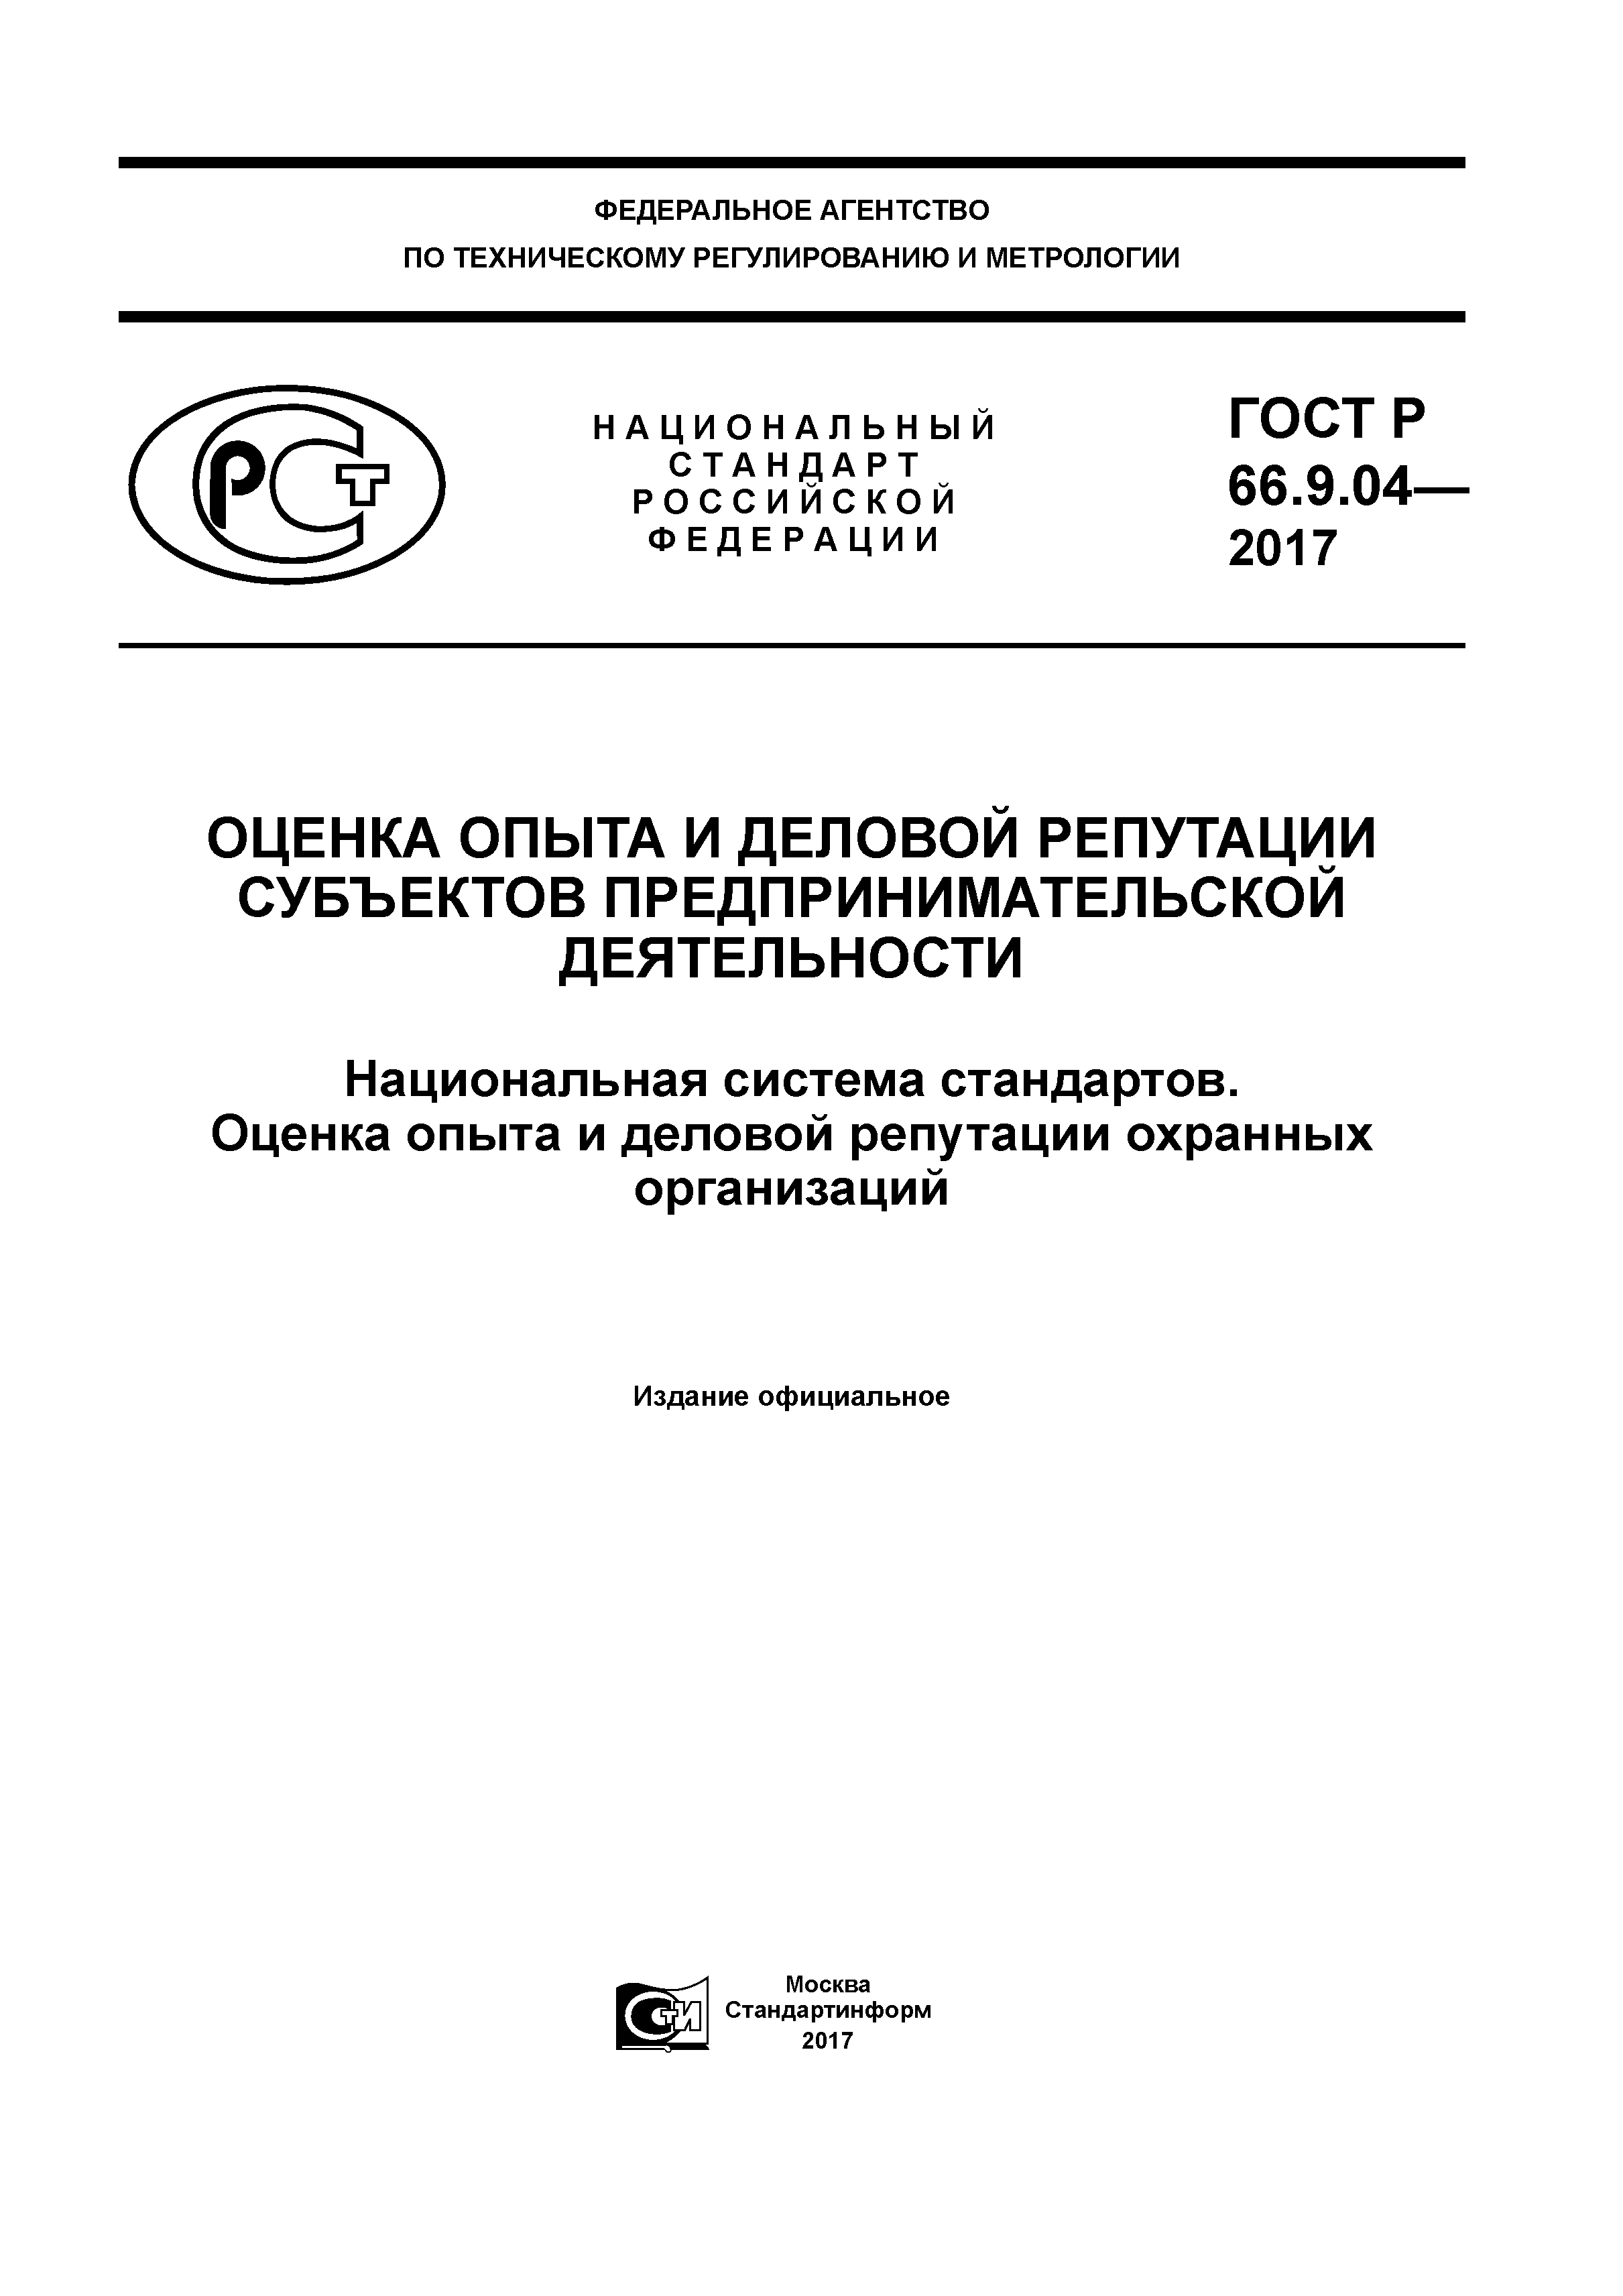 ГОСТ Р 66.9.04-2017